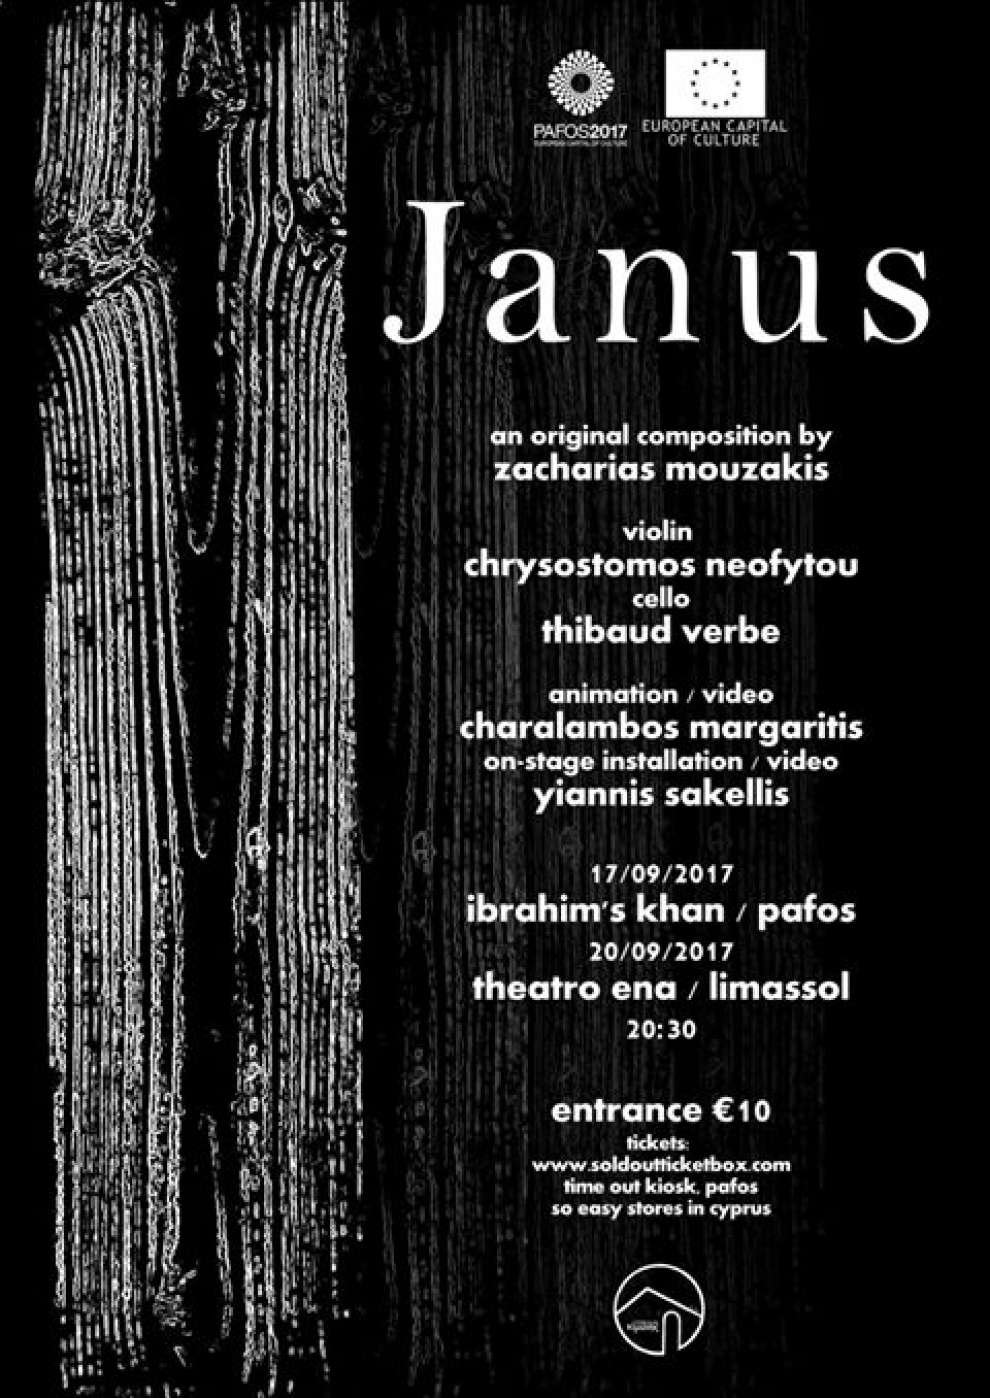 Janus - Φιλοξενείται από το Κέντρο Τέχνης Κίμωνος και την Πάφος 2017 ...